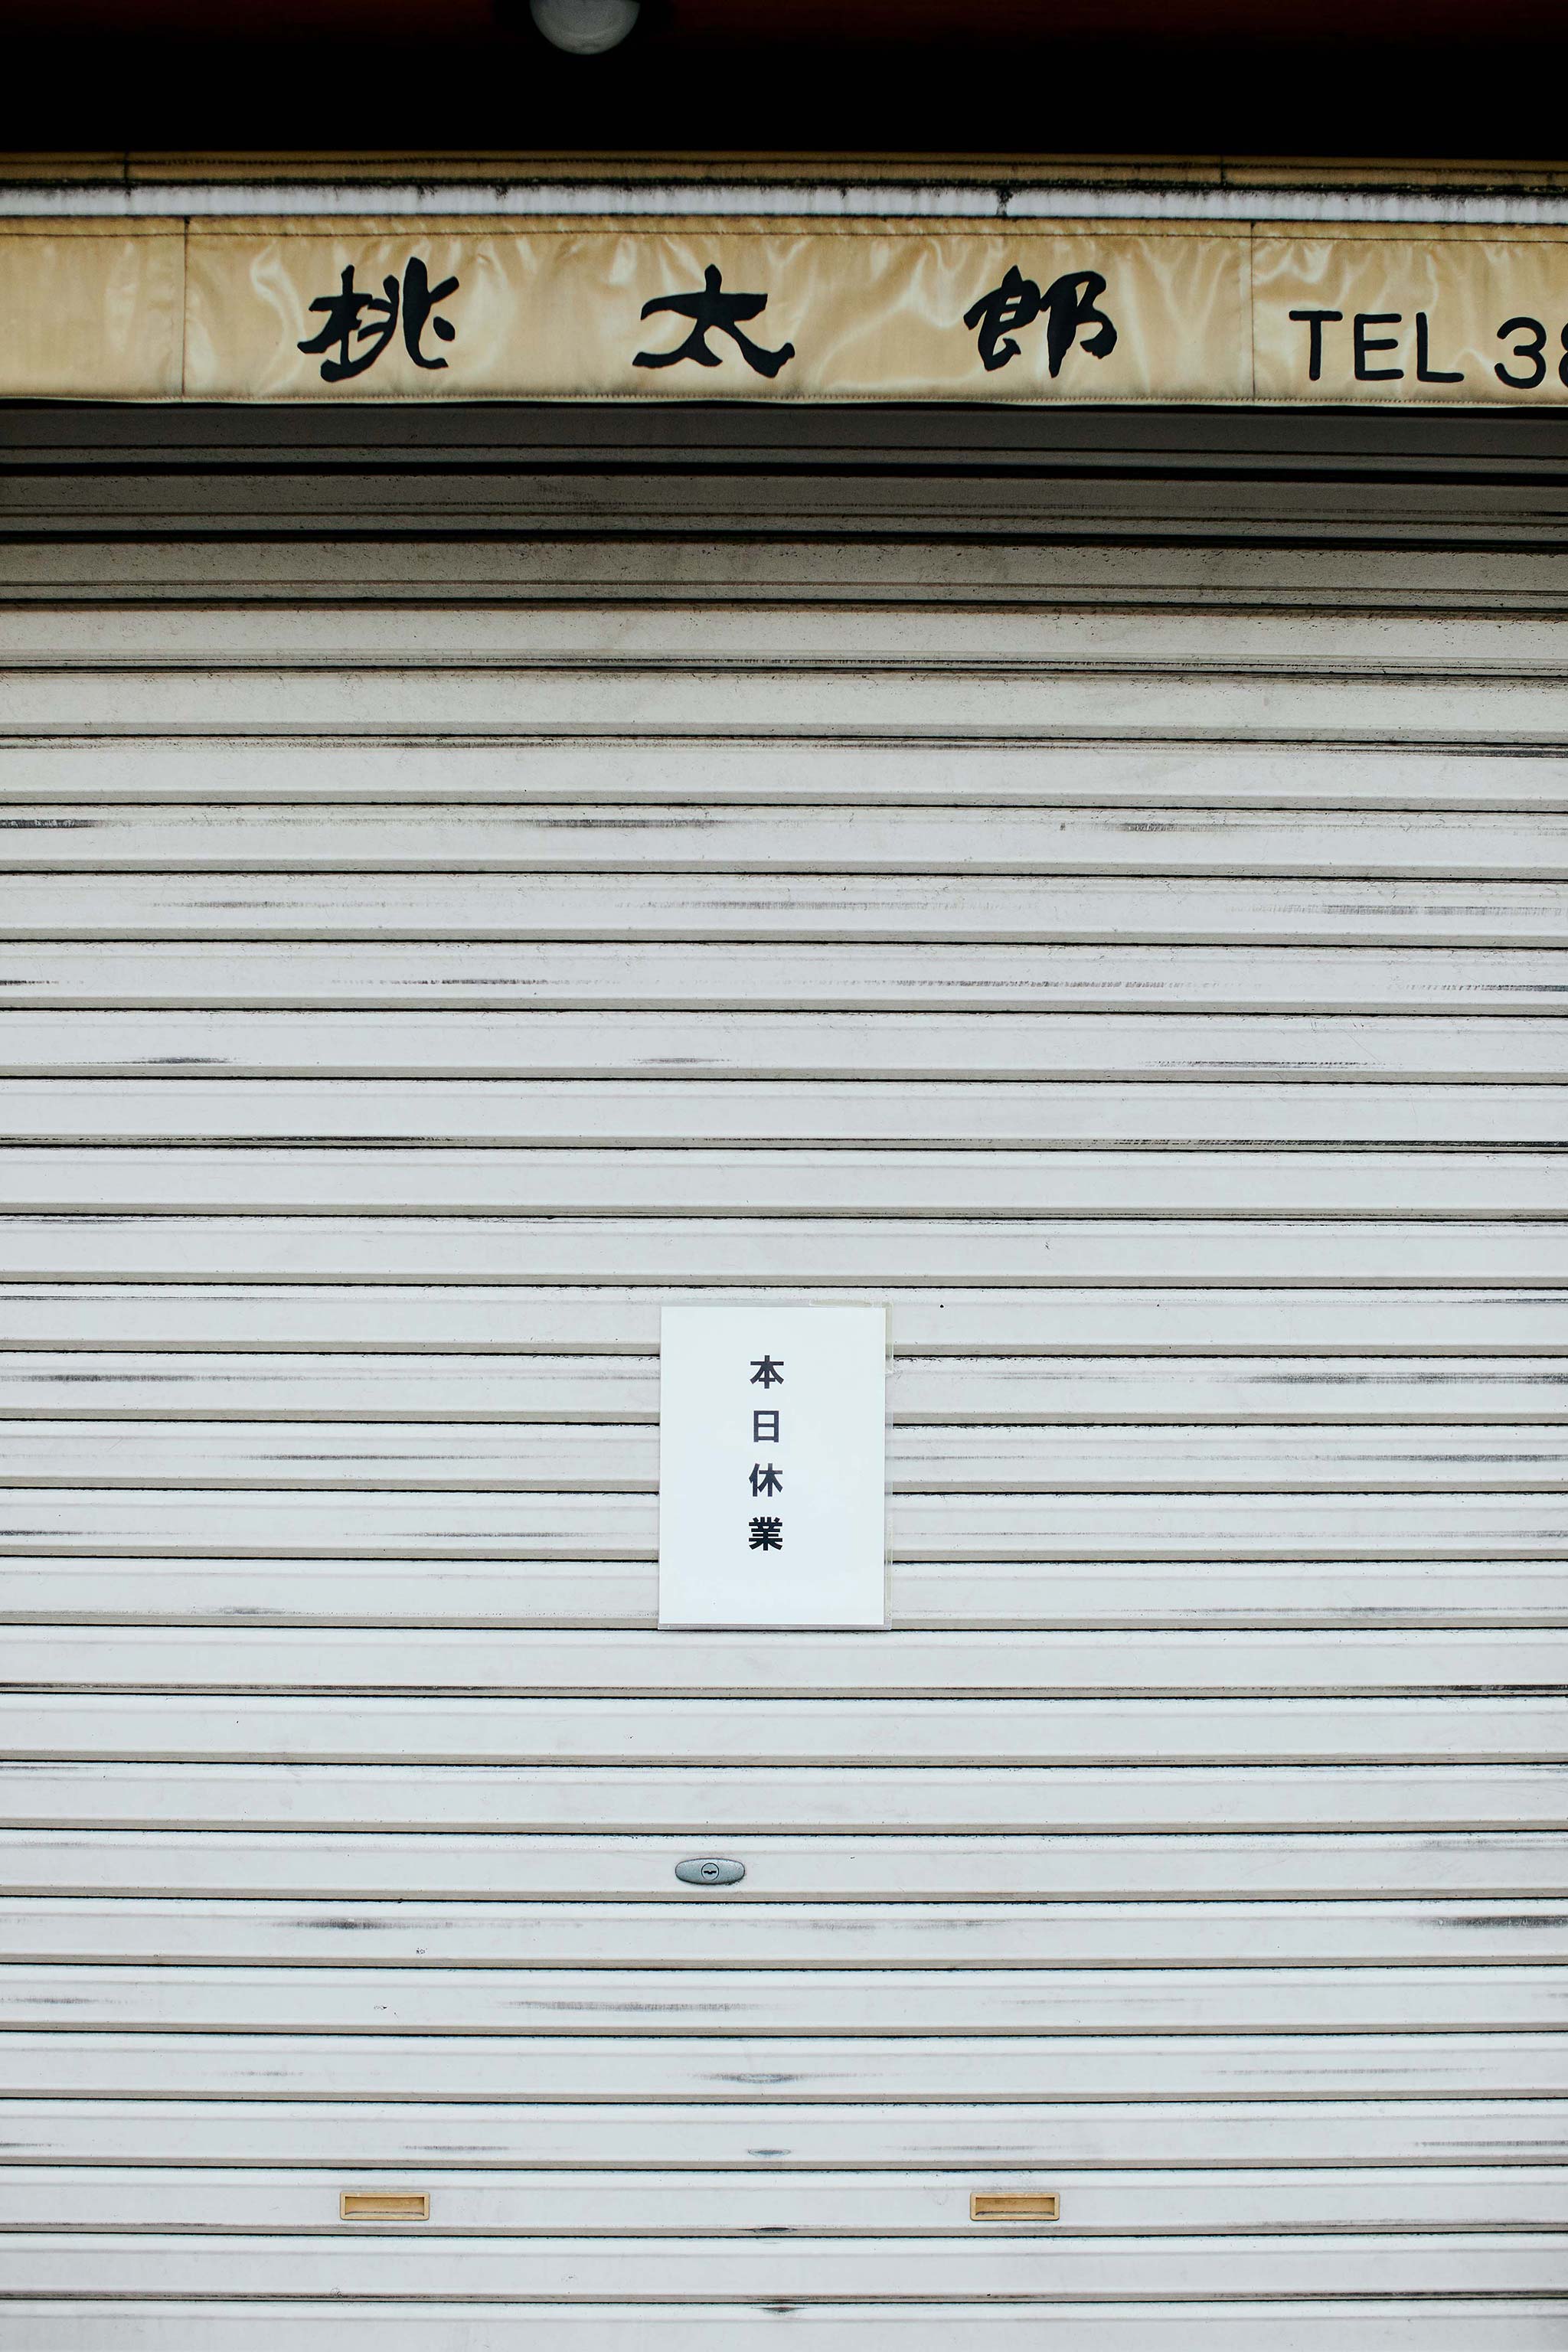 tokyo asakusa notice on shop front